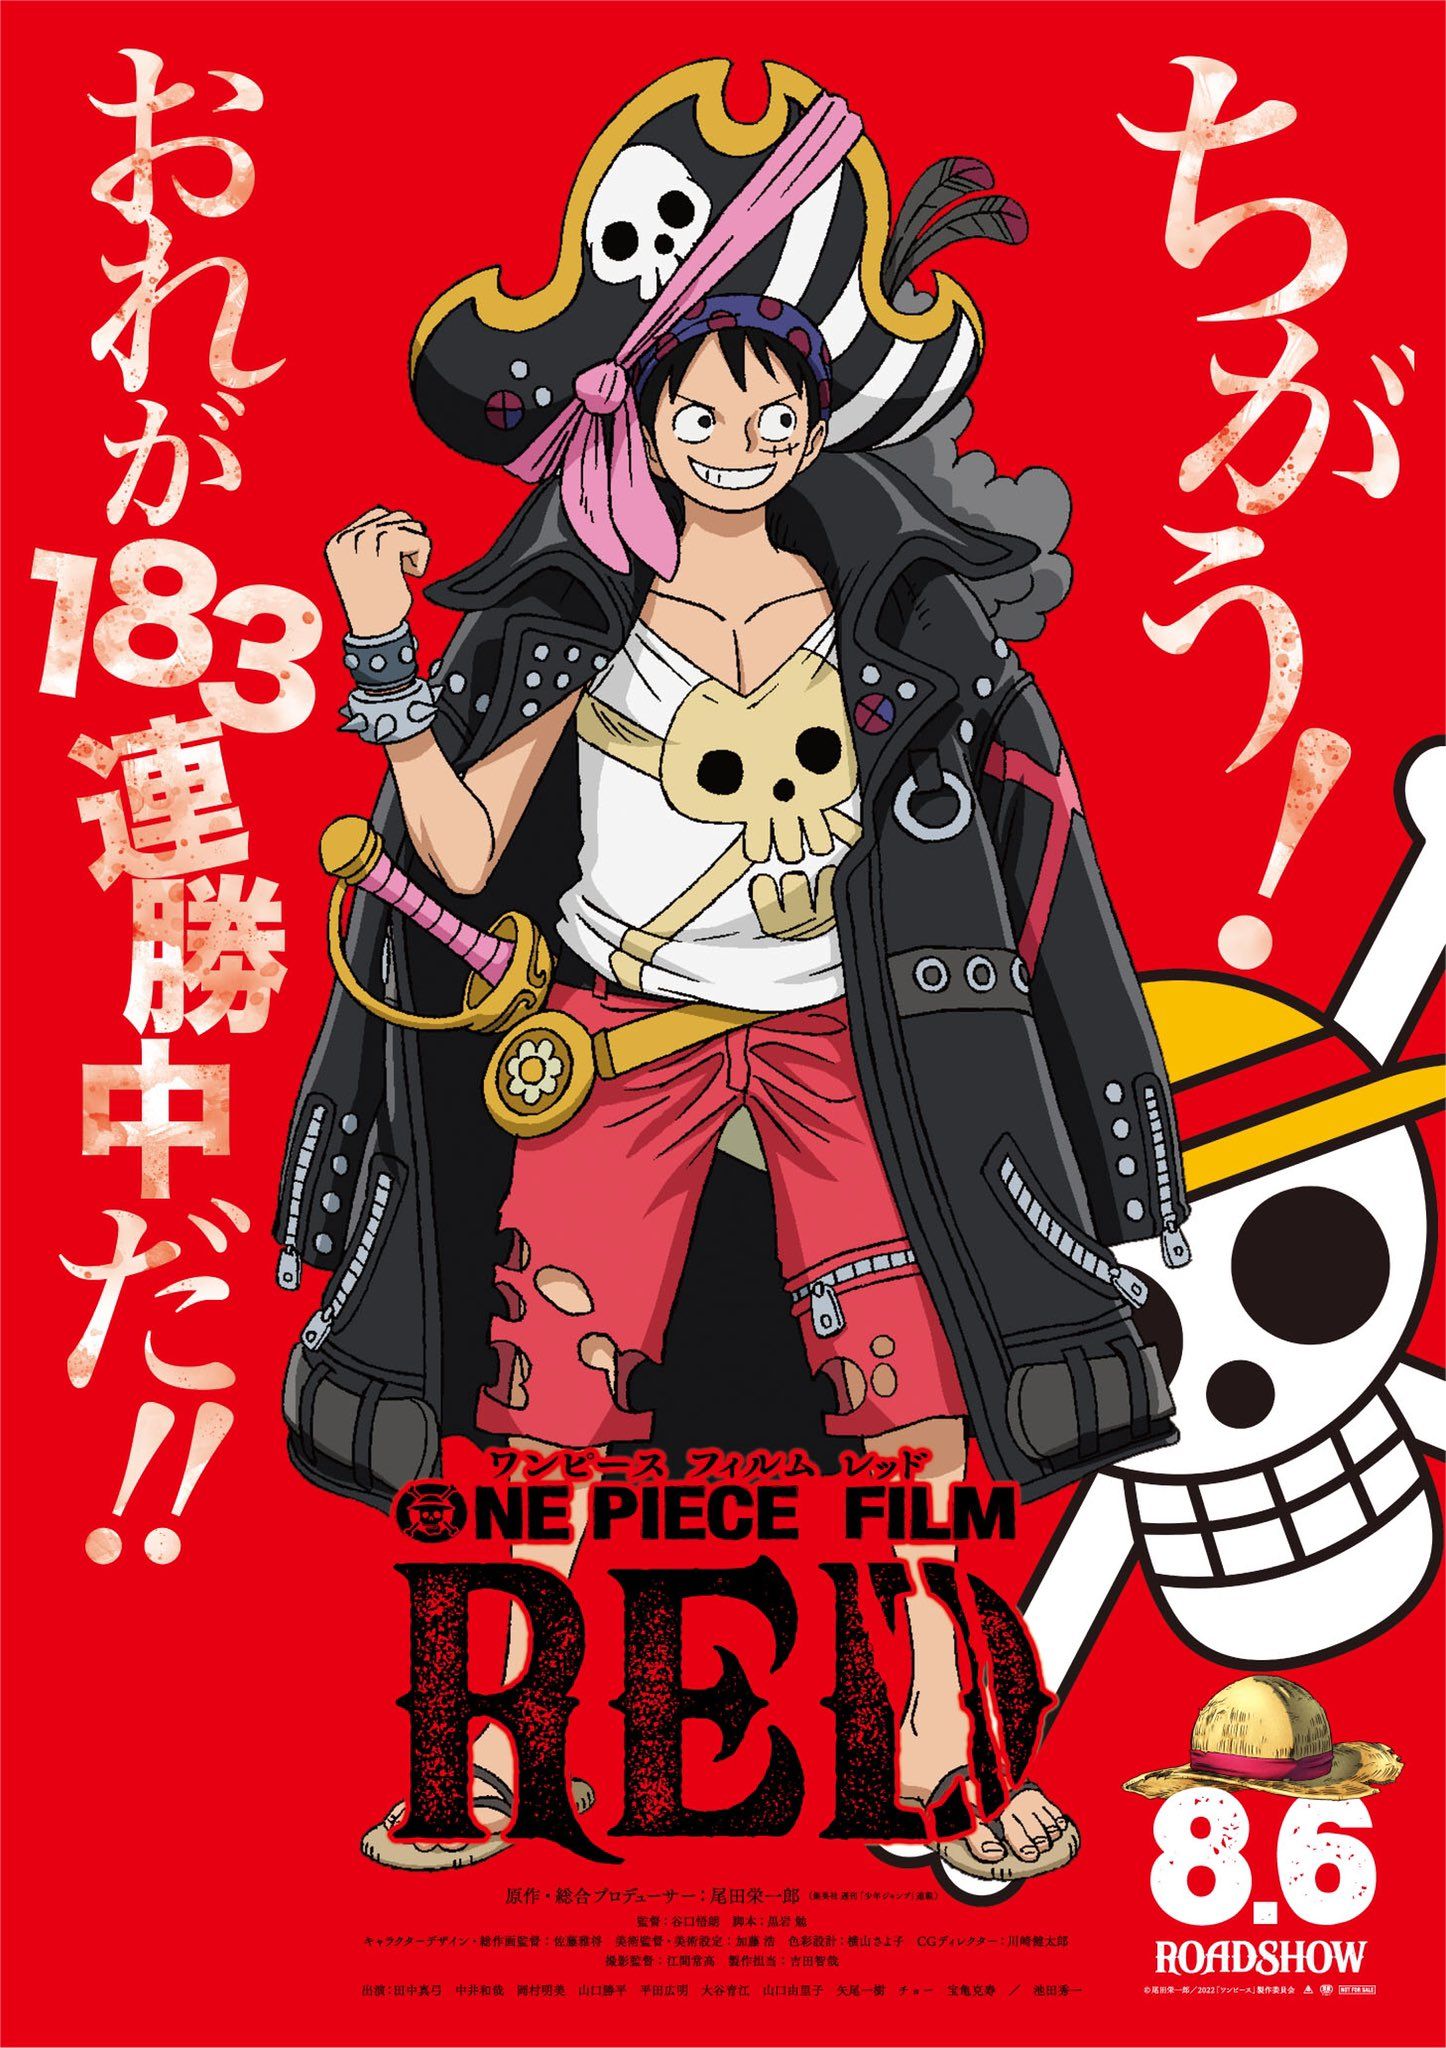 Luffy dengan mengenakan seragam bajak laut tapi dari jaket layaknya seperti komunitas pemotor yang kekinian.